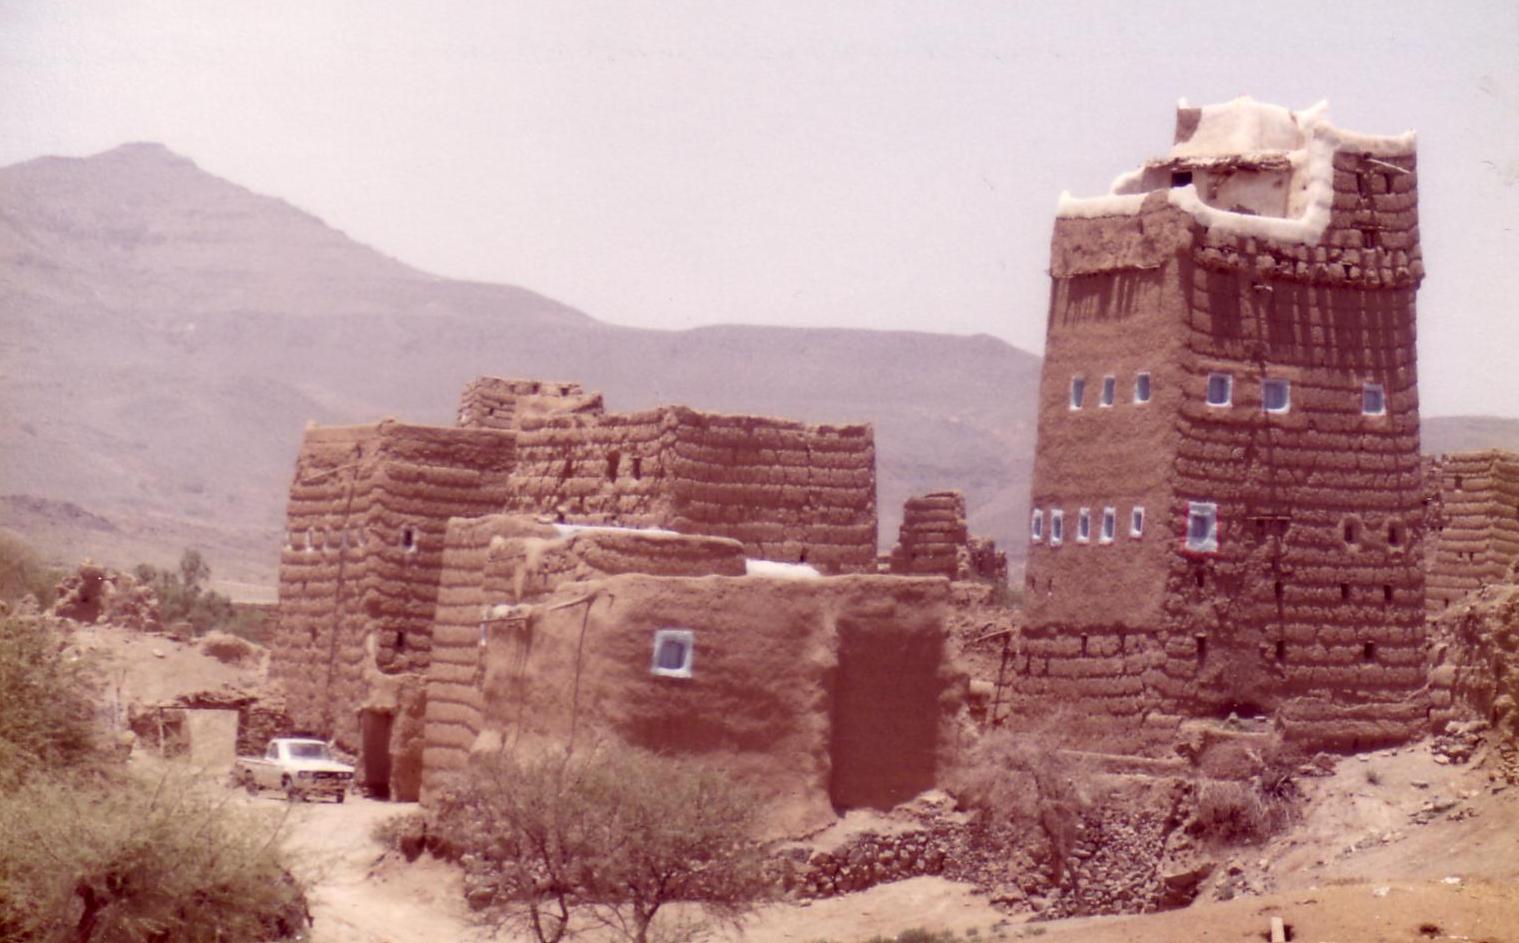 Village between Khamis Mushayt and Najran